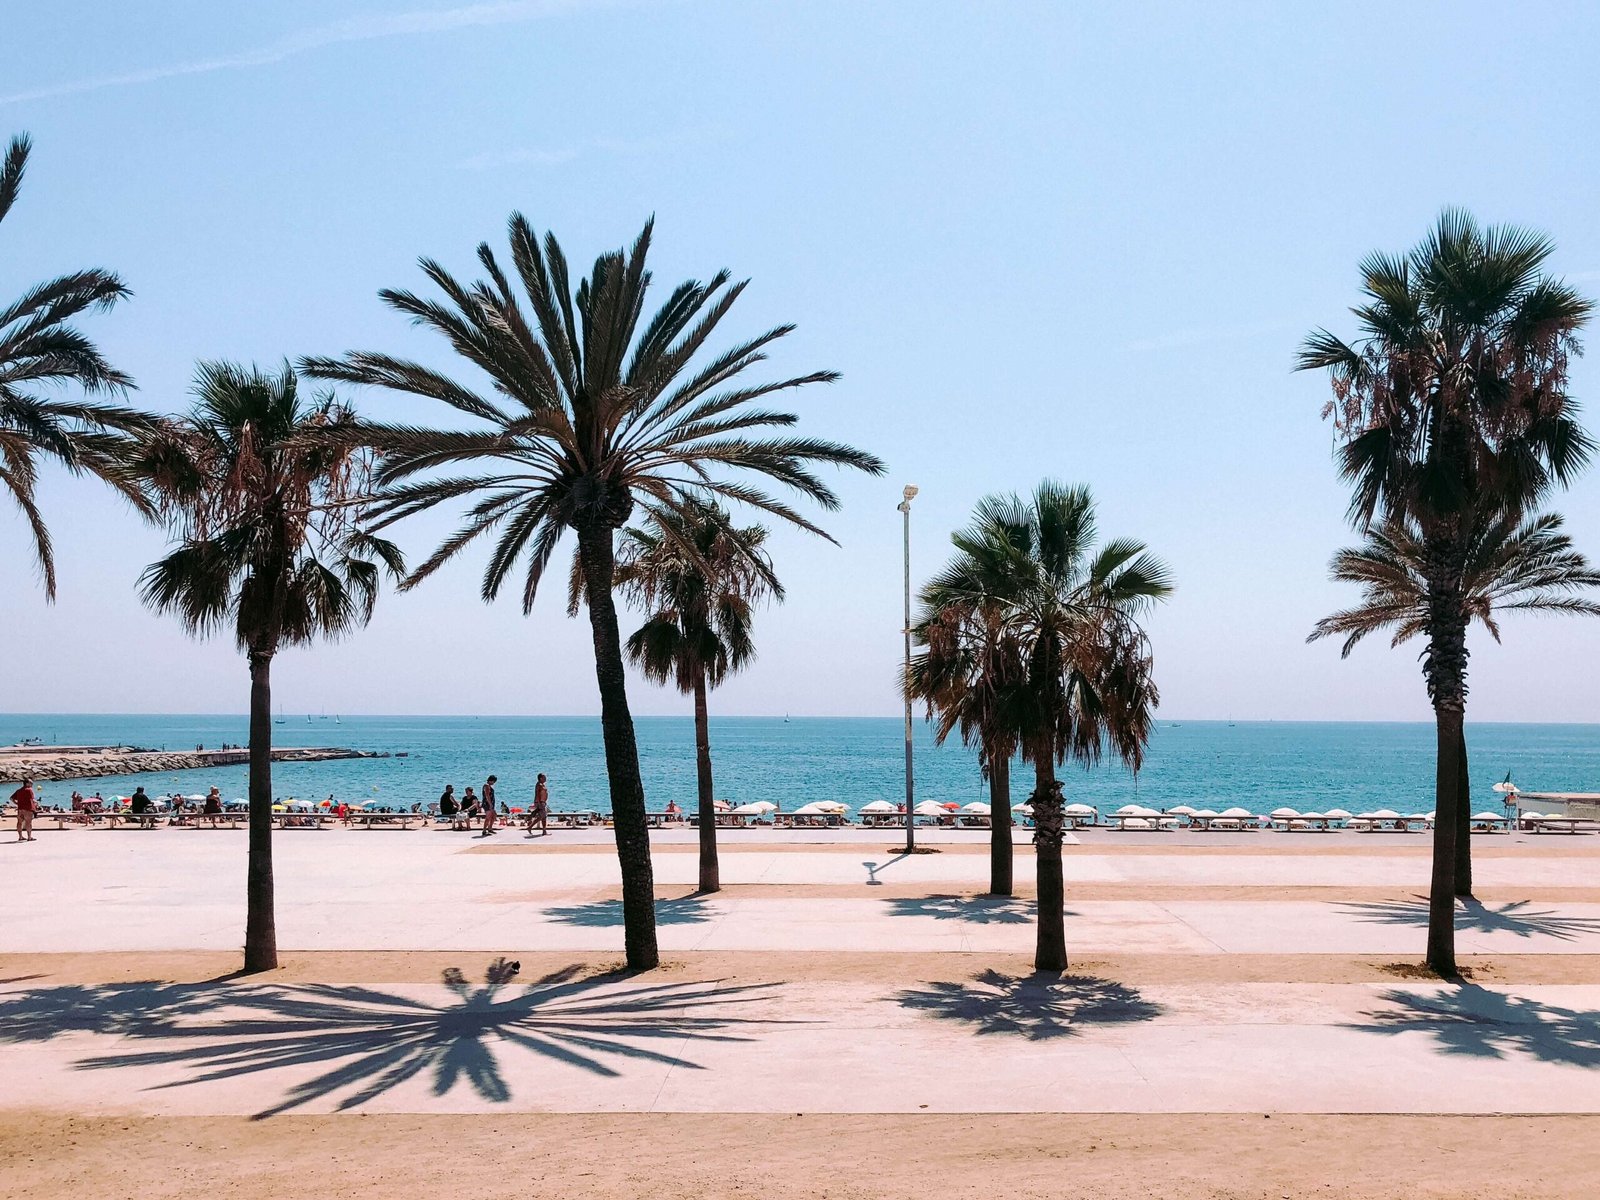 The best ways to enjoy summer in Barcelona